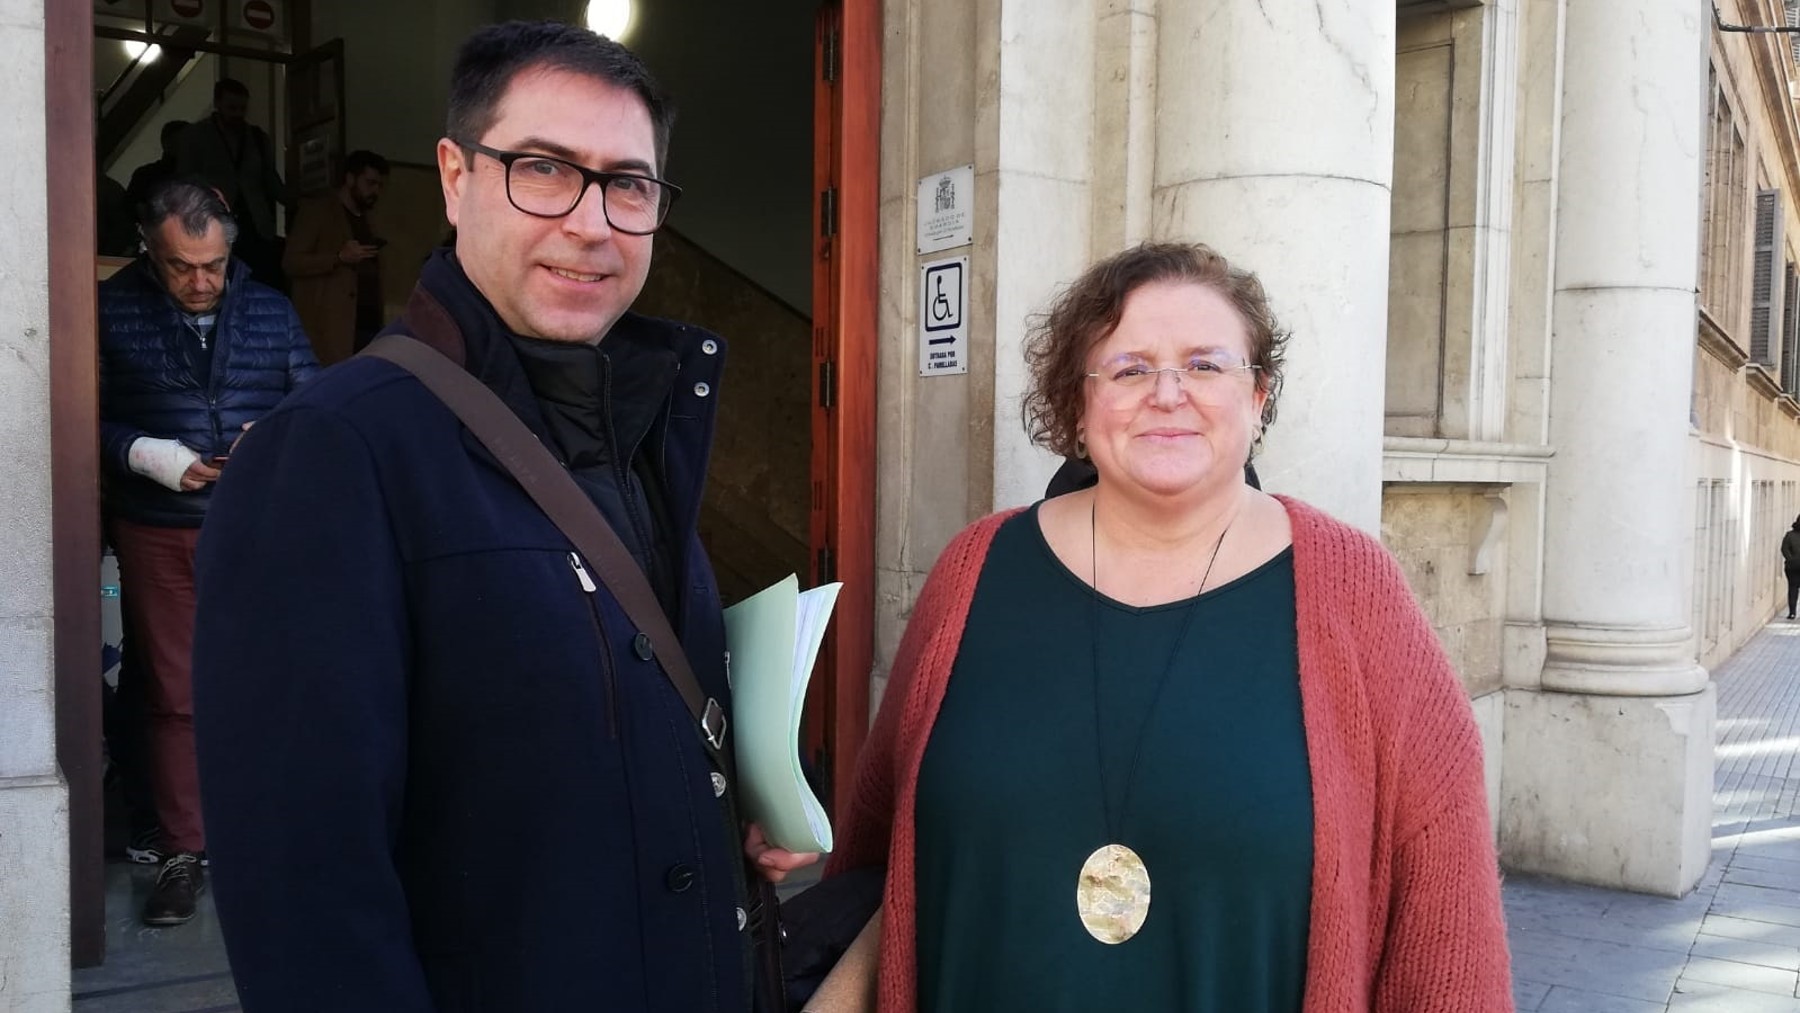 La exconsellera de Cultura y regidora de MÉS en Andratx, Ruth Mateu, junto a su abogado, Sebastià Rubí, tras declarar en el Juzgado.